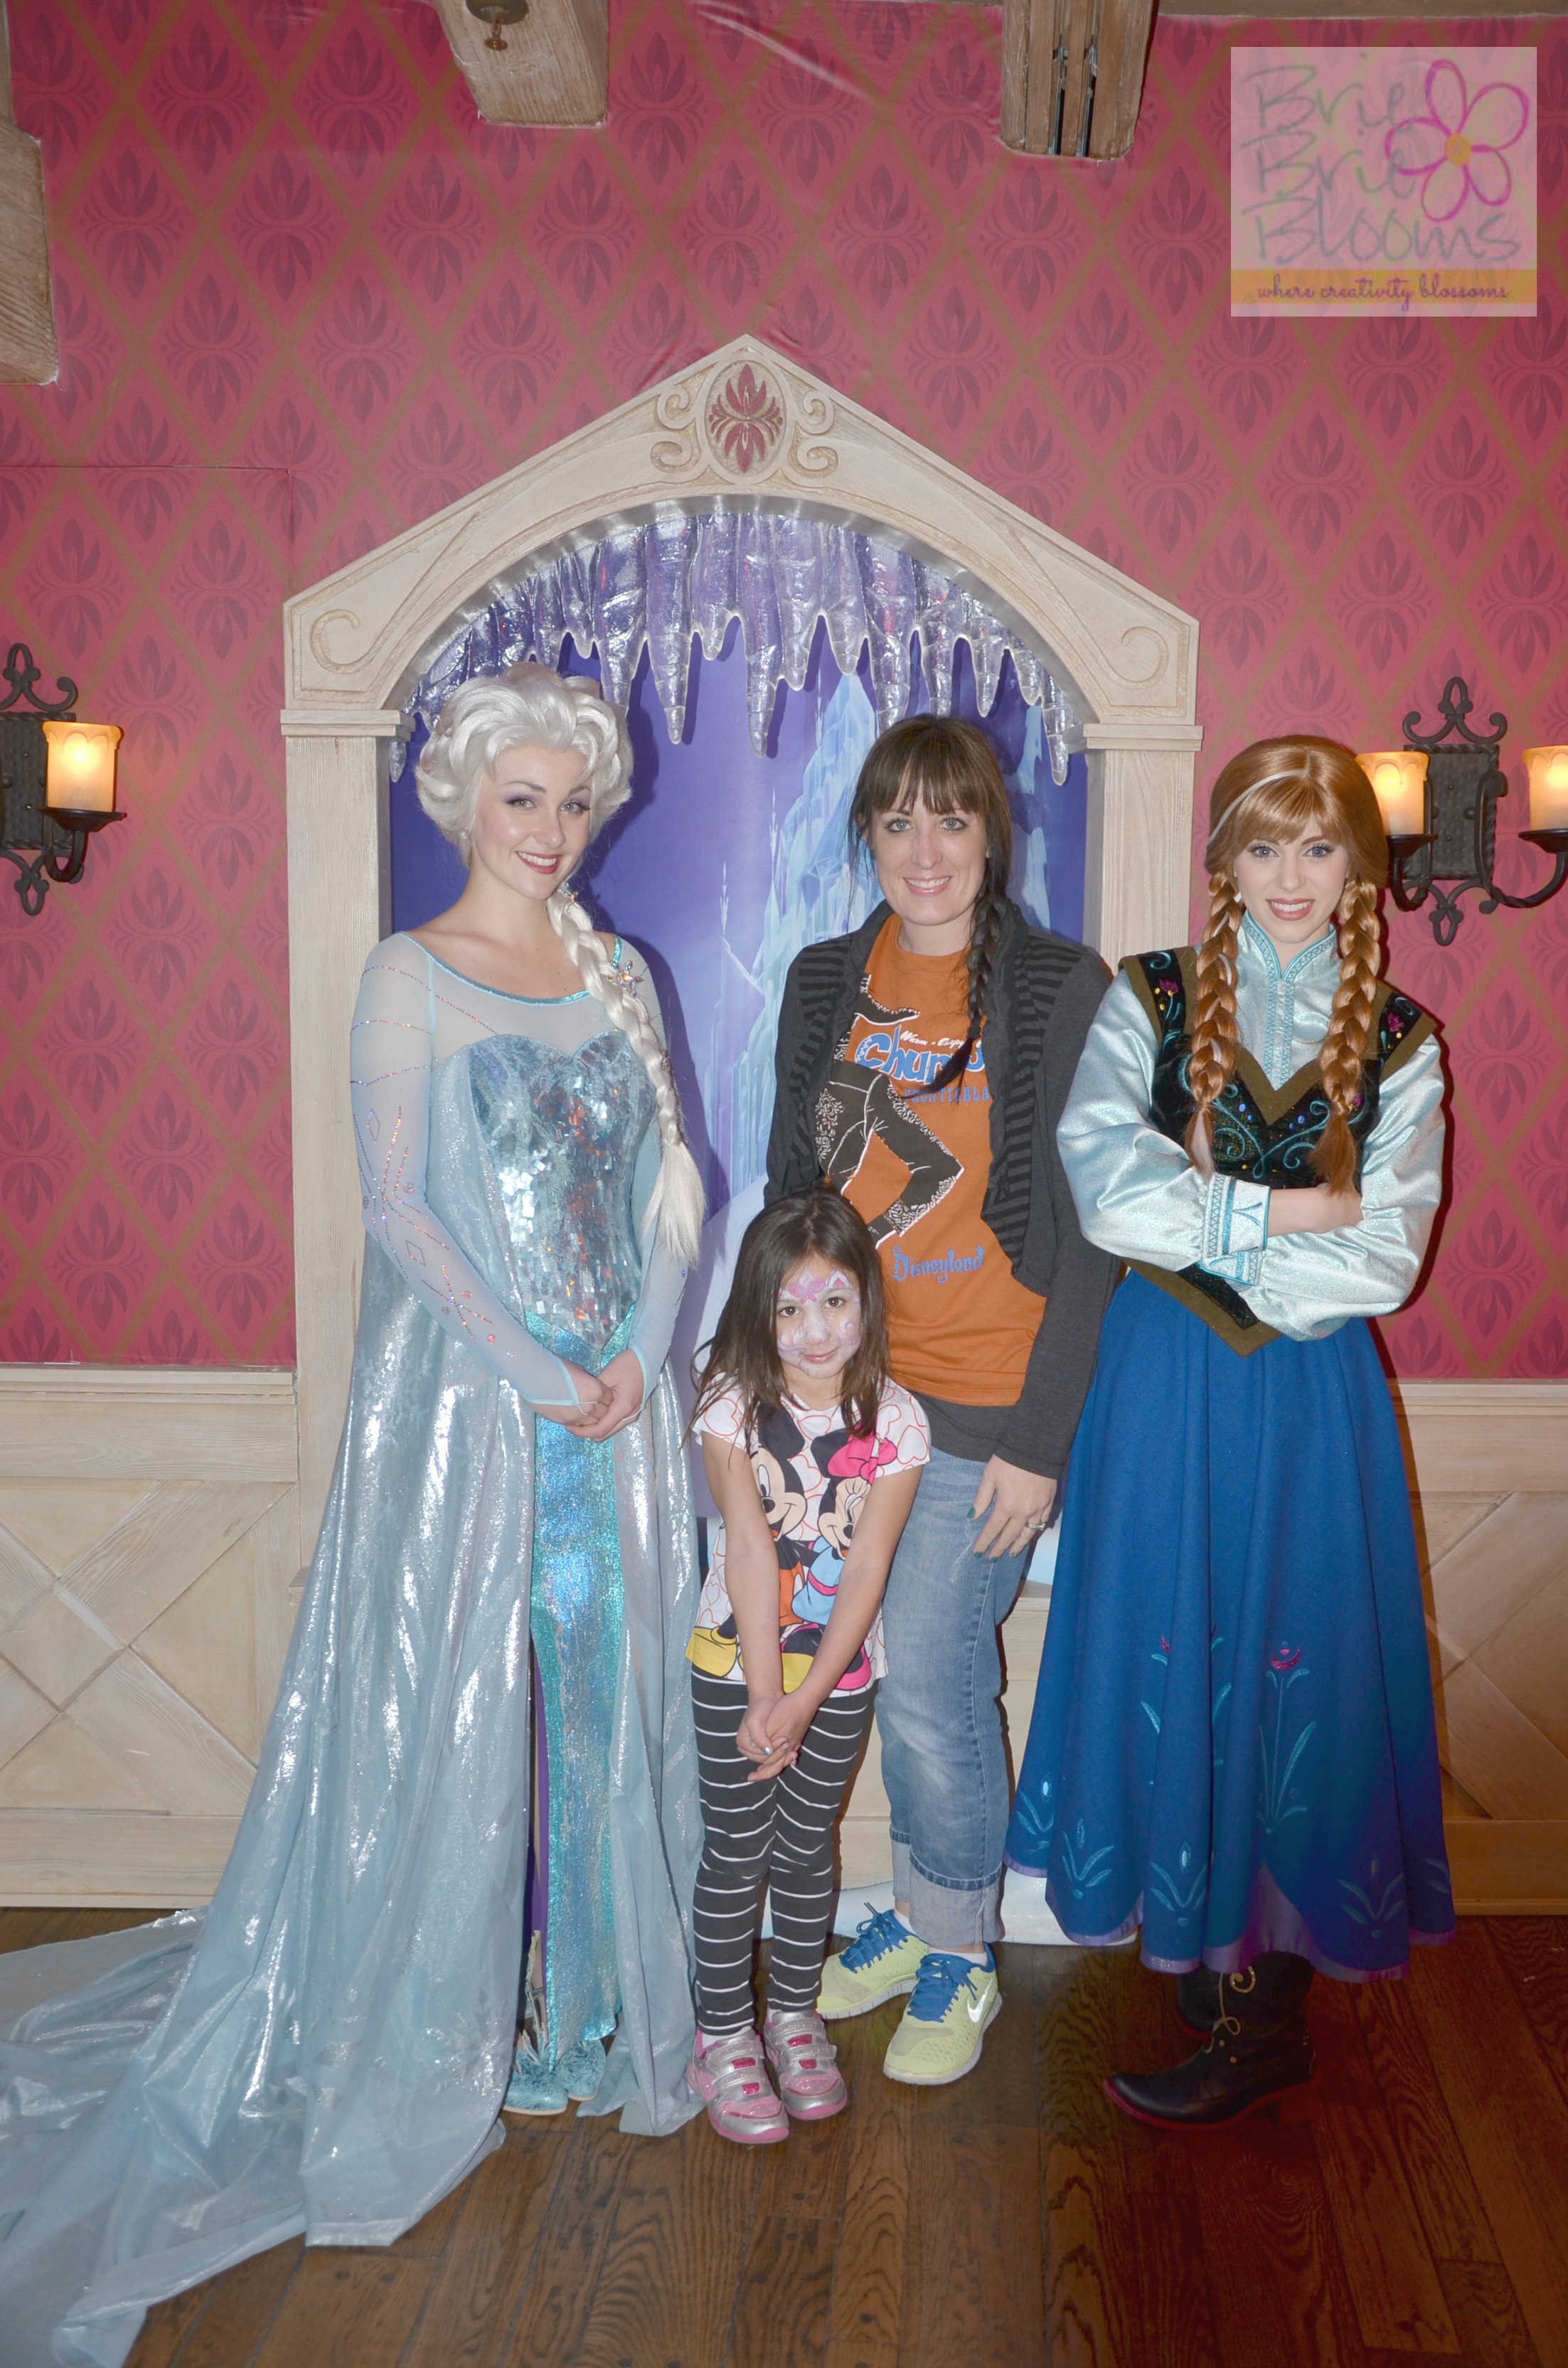 meeting Anna and Elsa in Disneyland